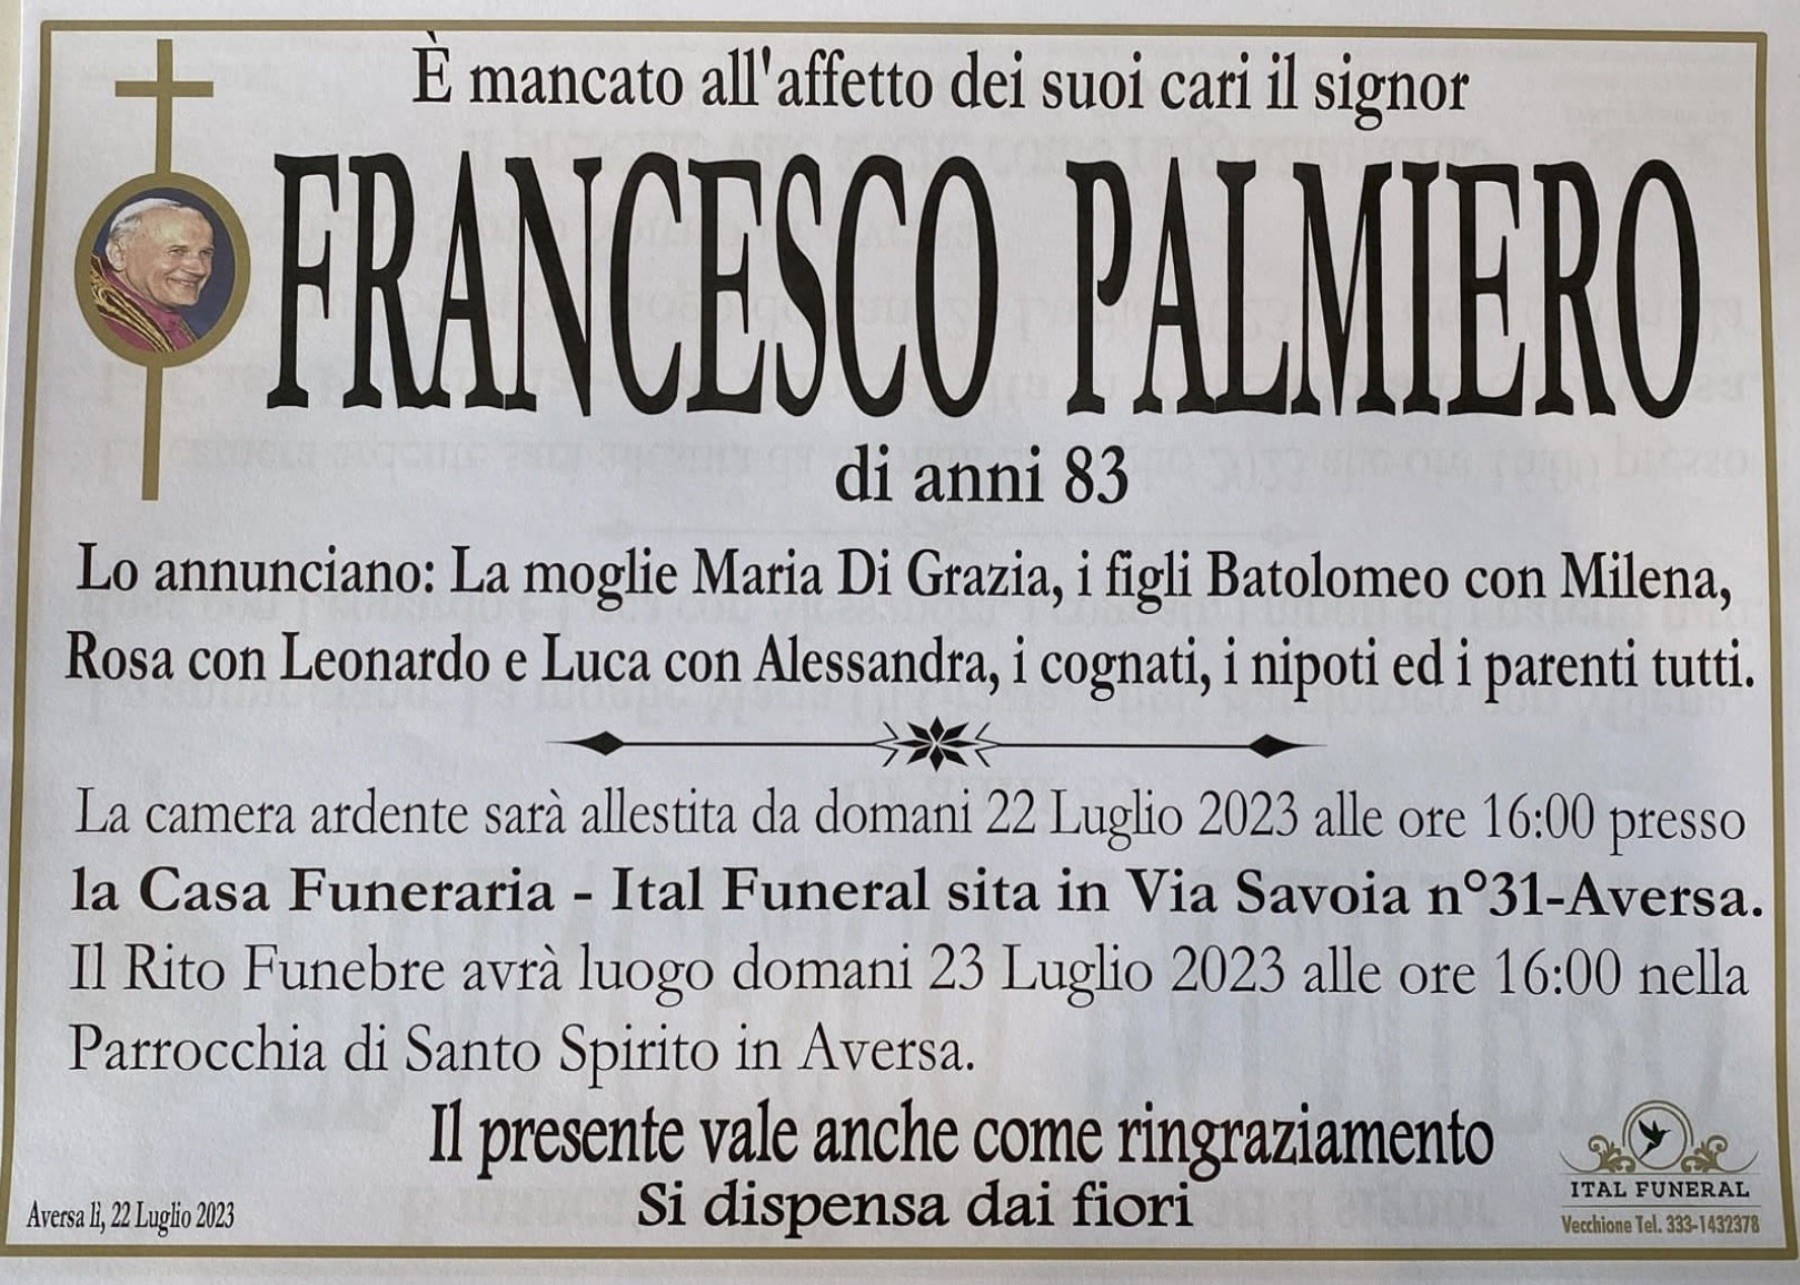 Francesco Palmiero